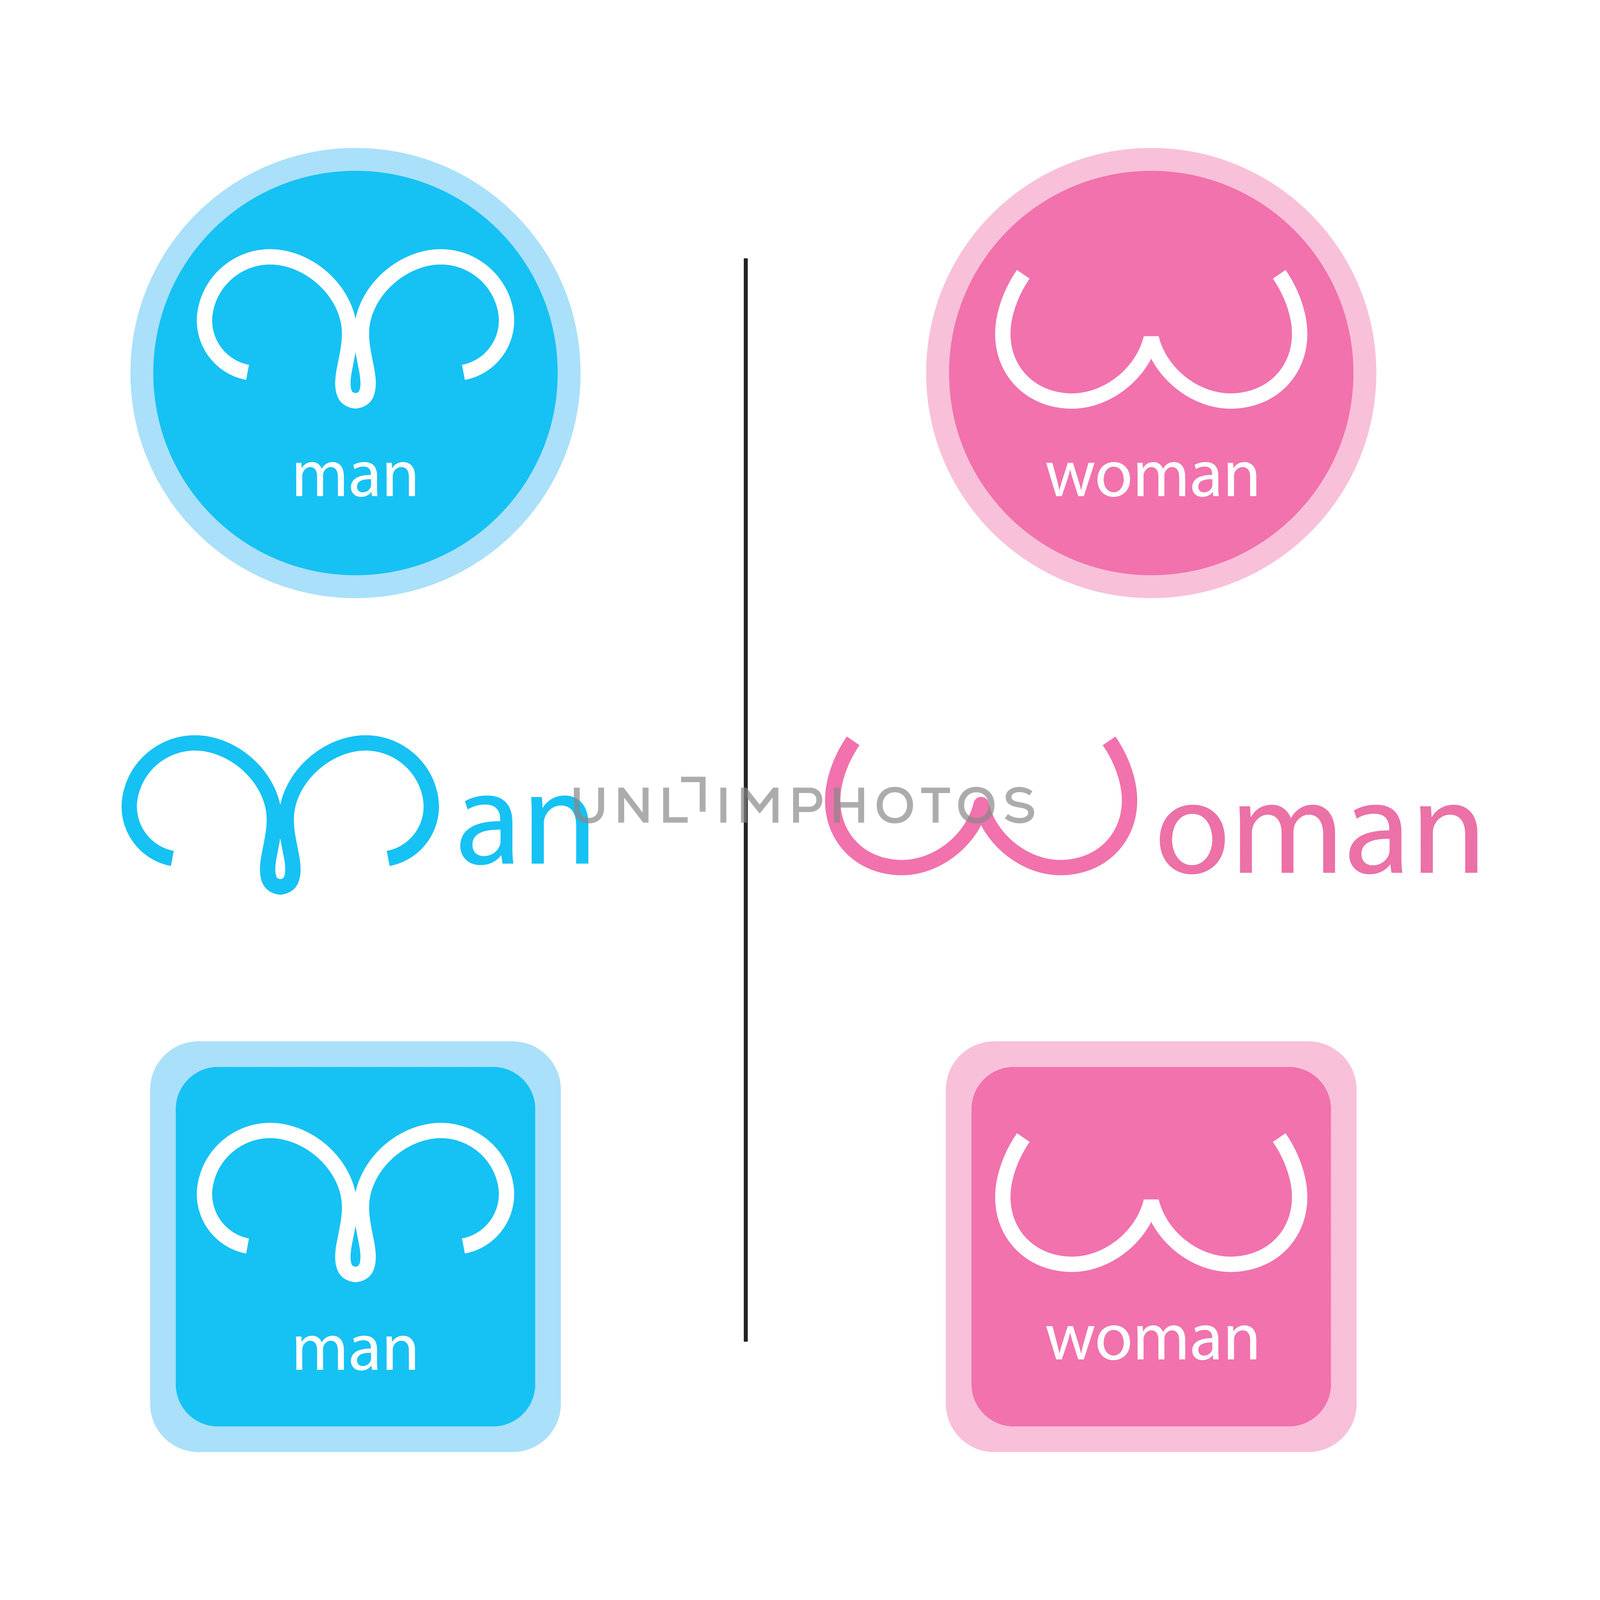 Man and woman symbol set